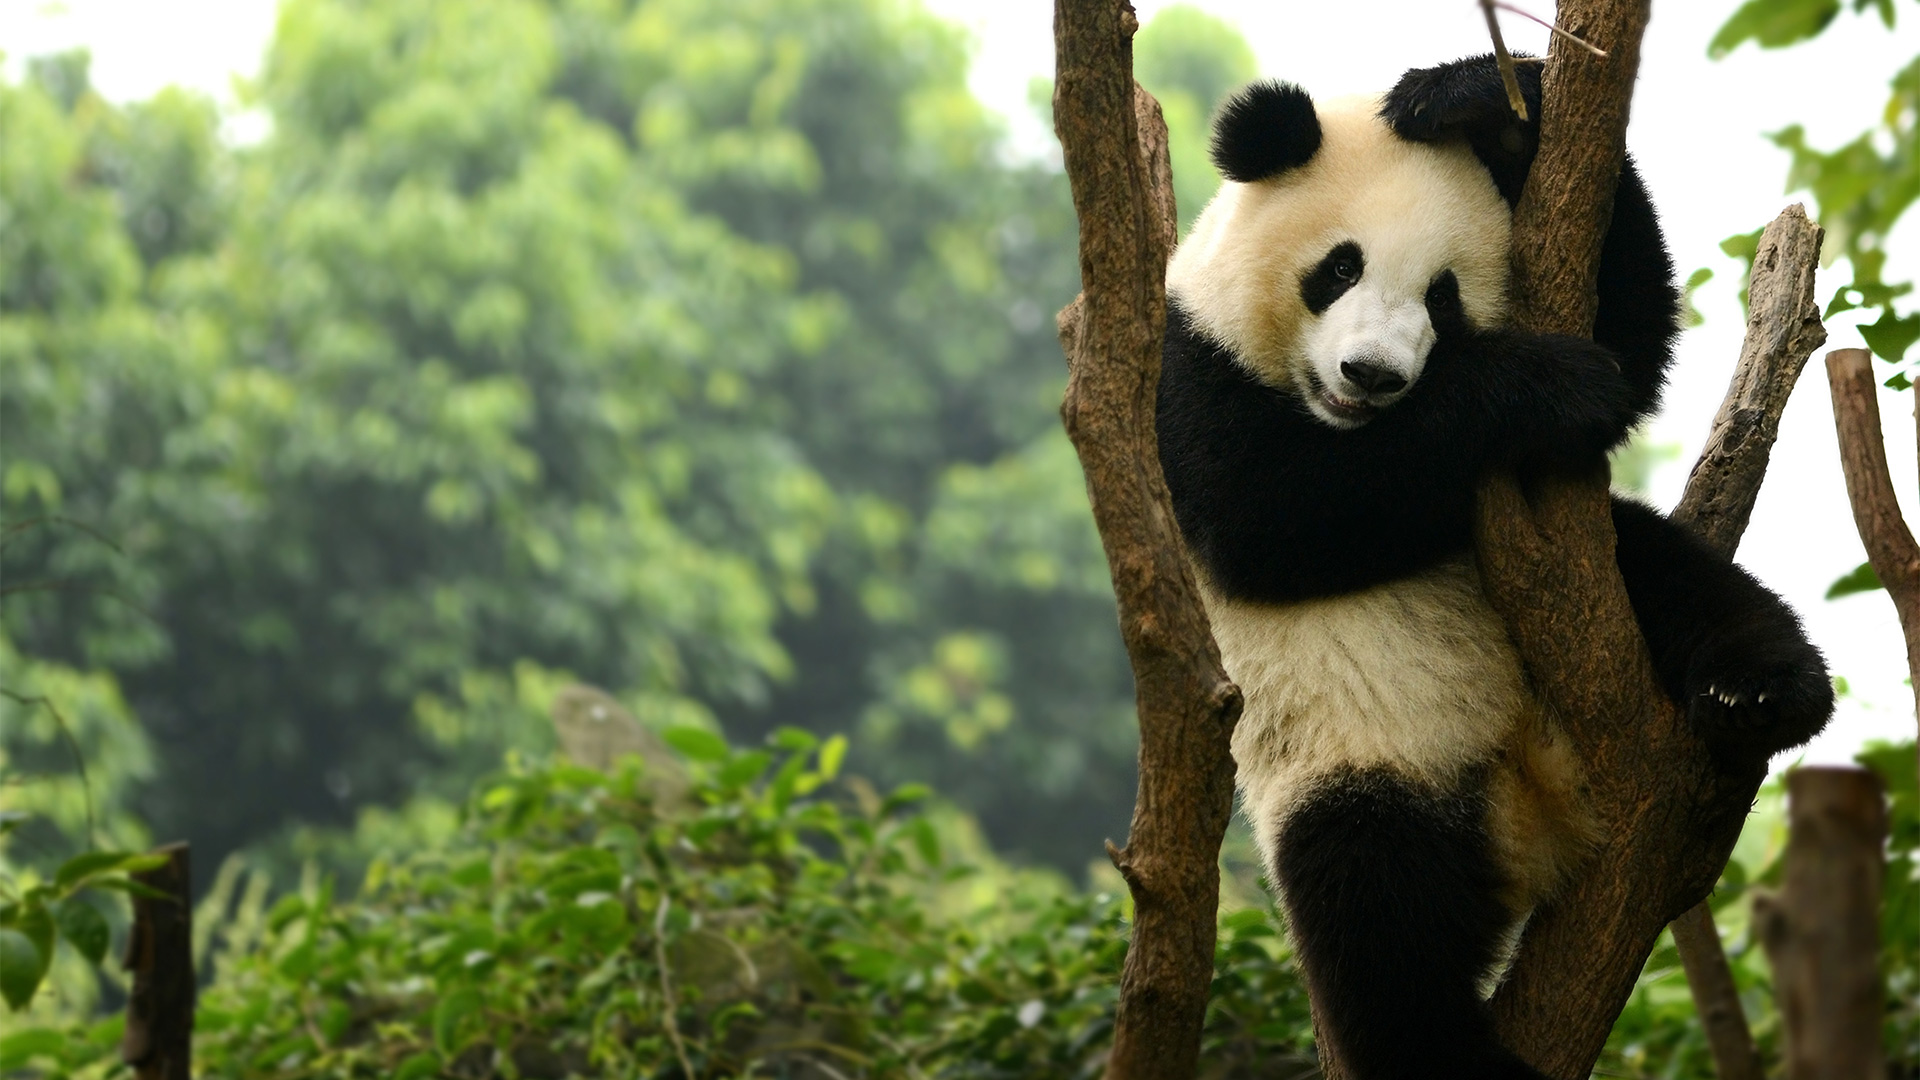 Panda bear playing in tree